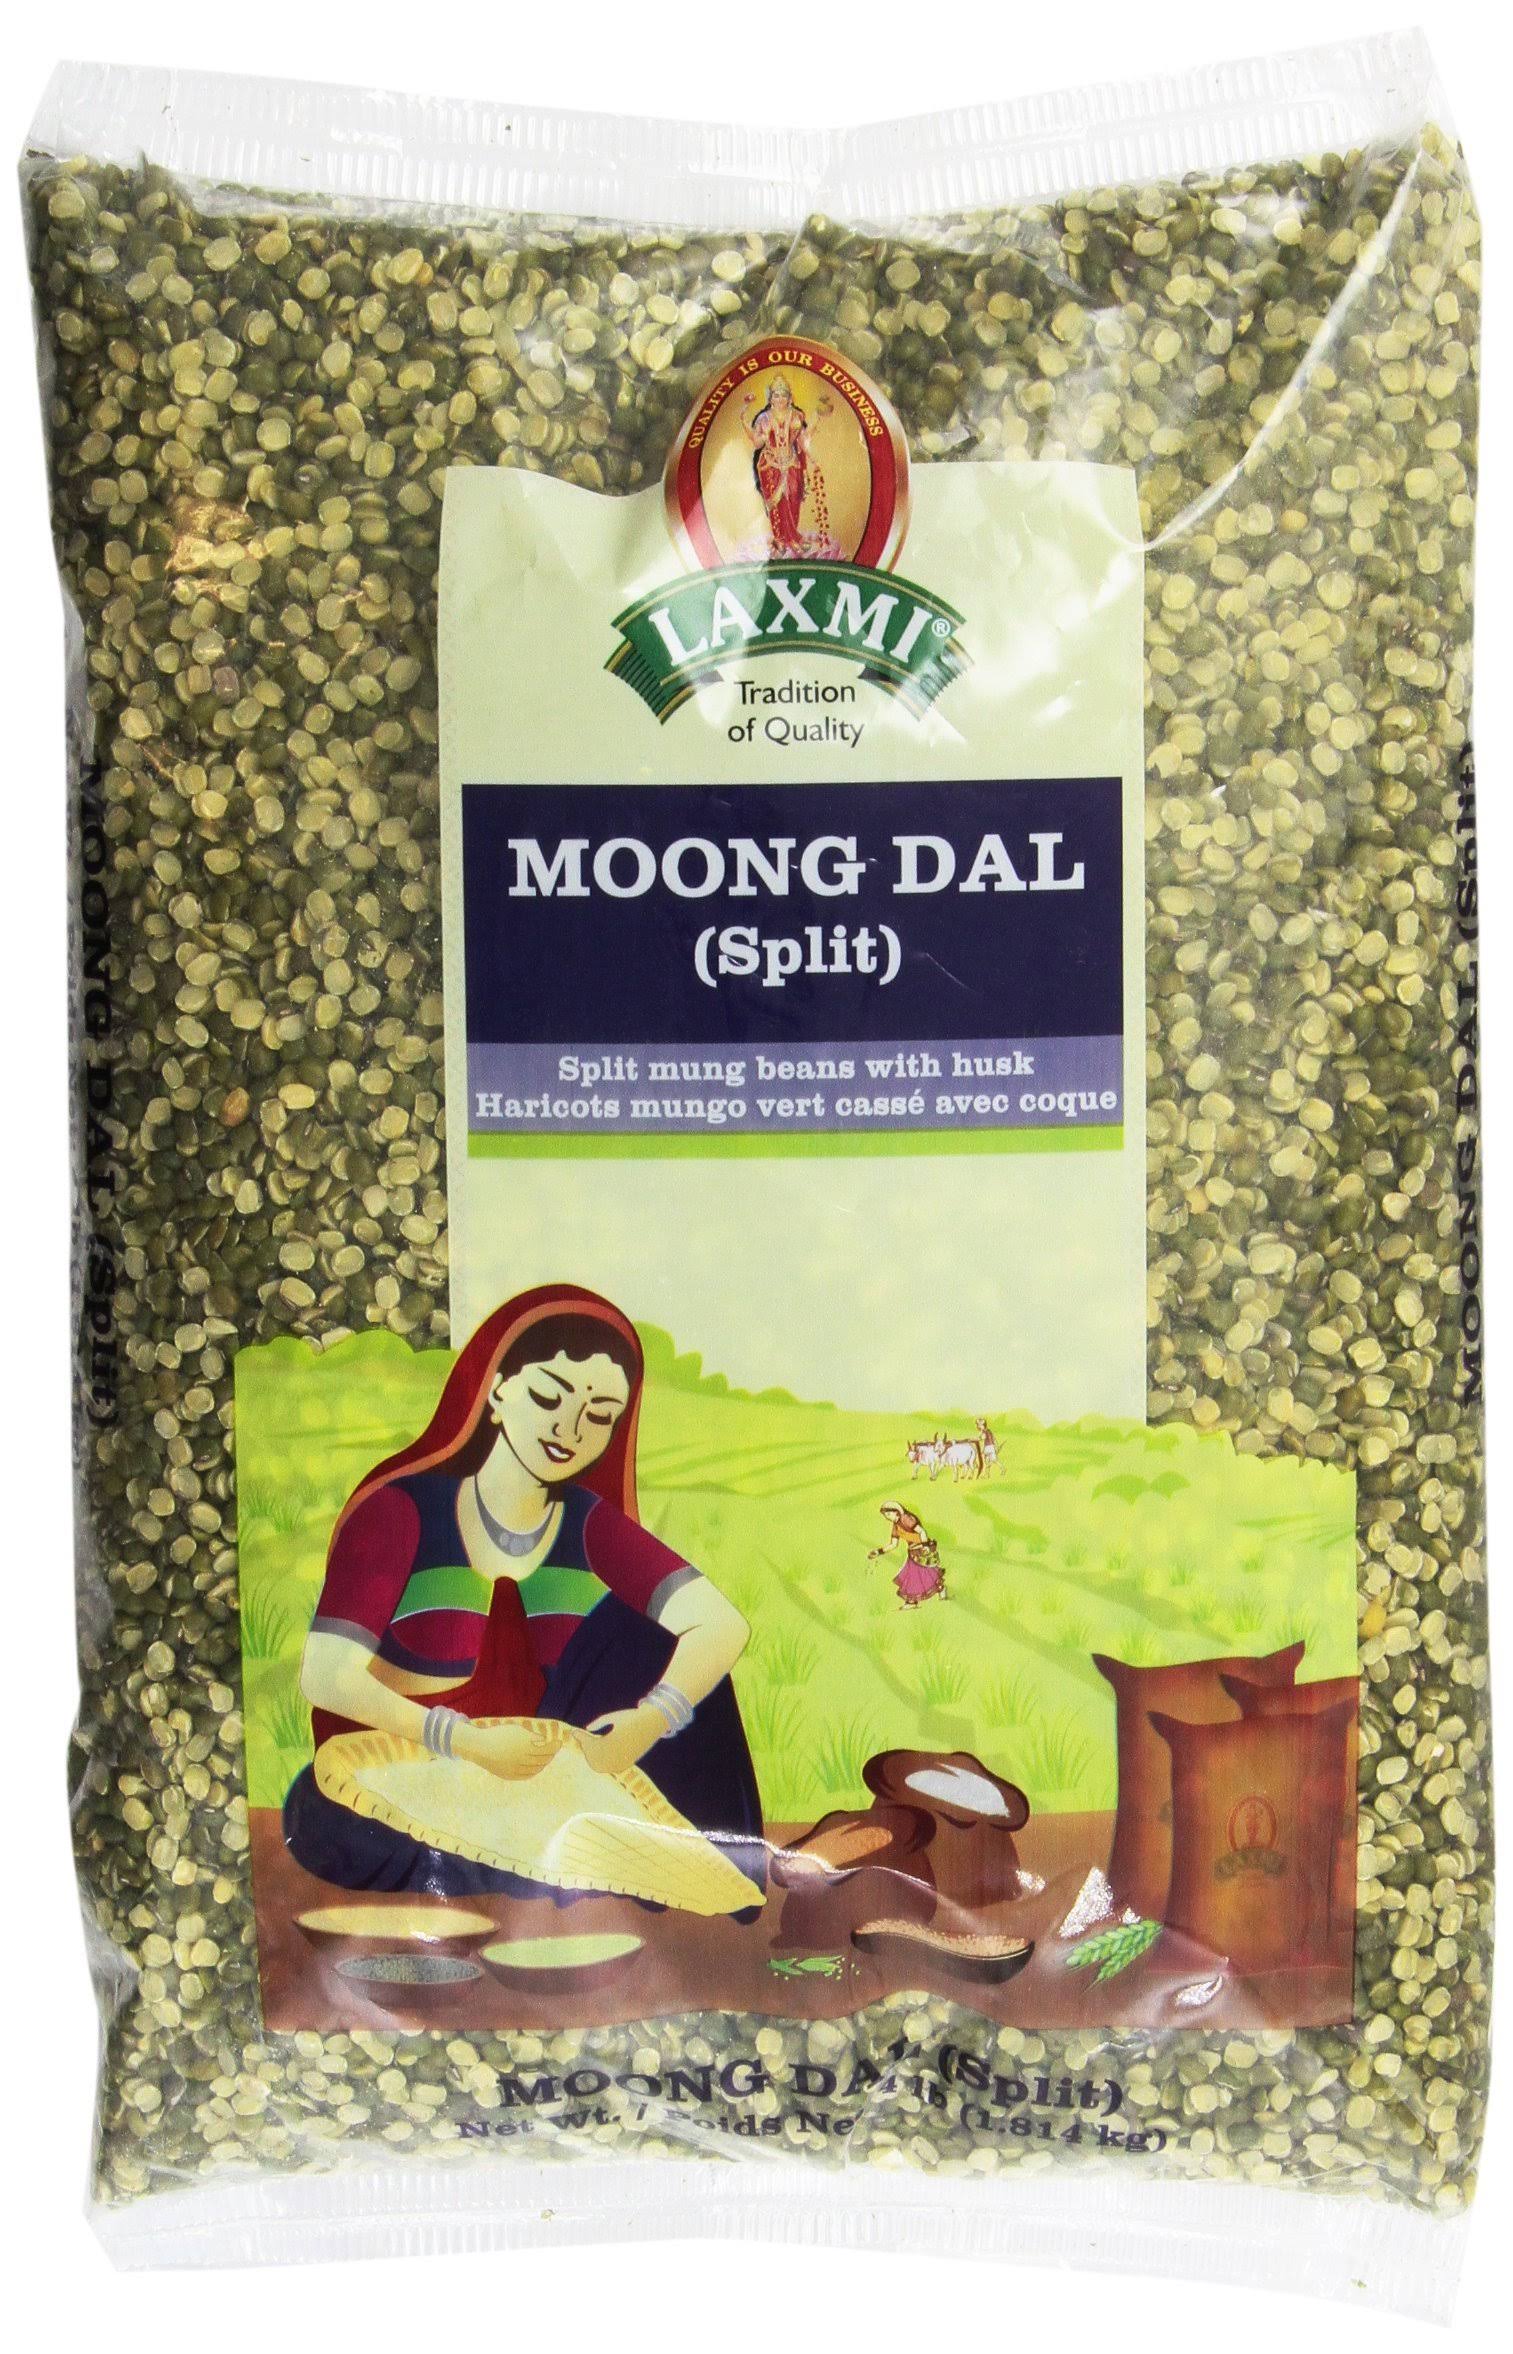 Laxmi Moong Dal Split Mung Beans, 4 Pounds